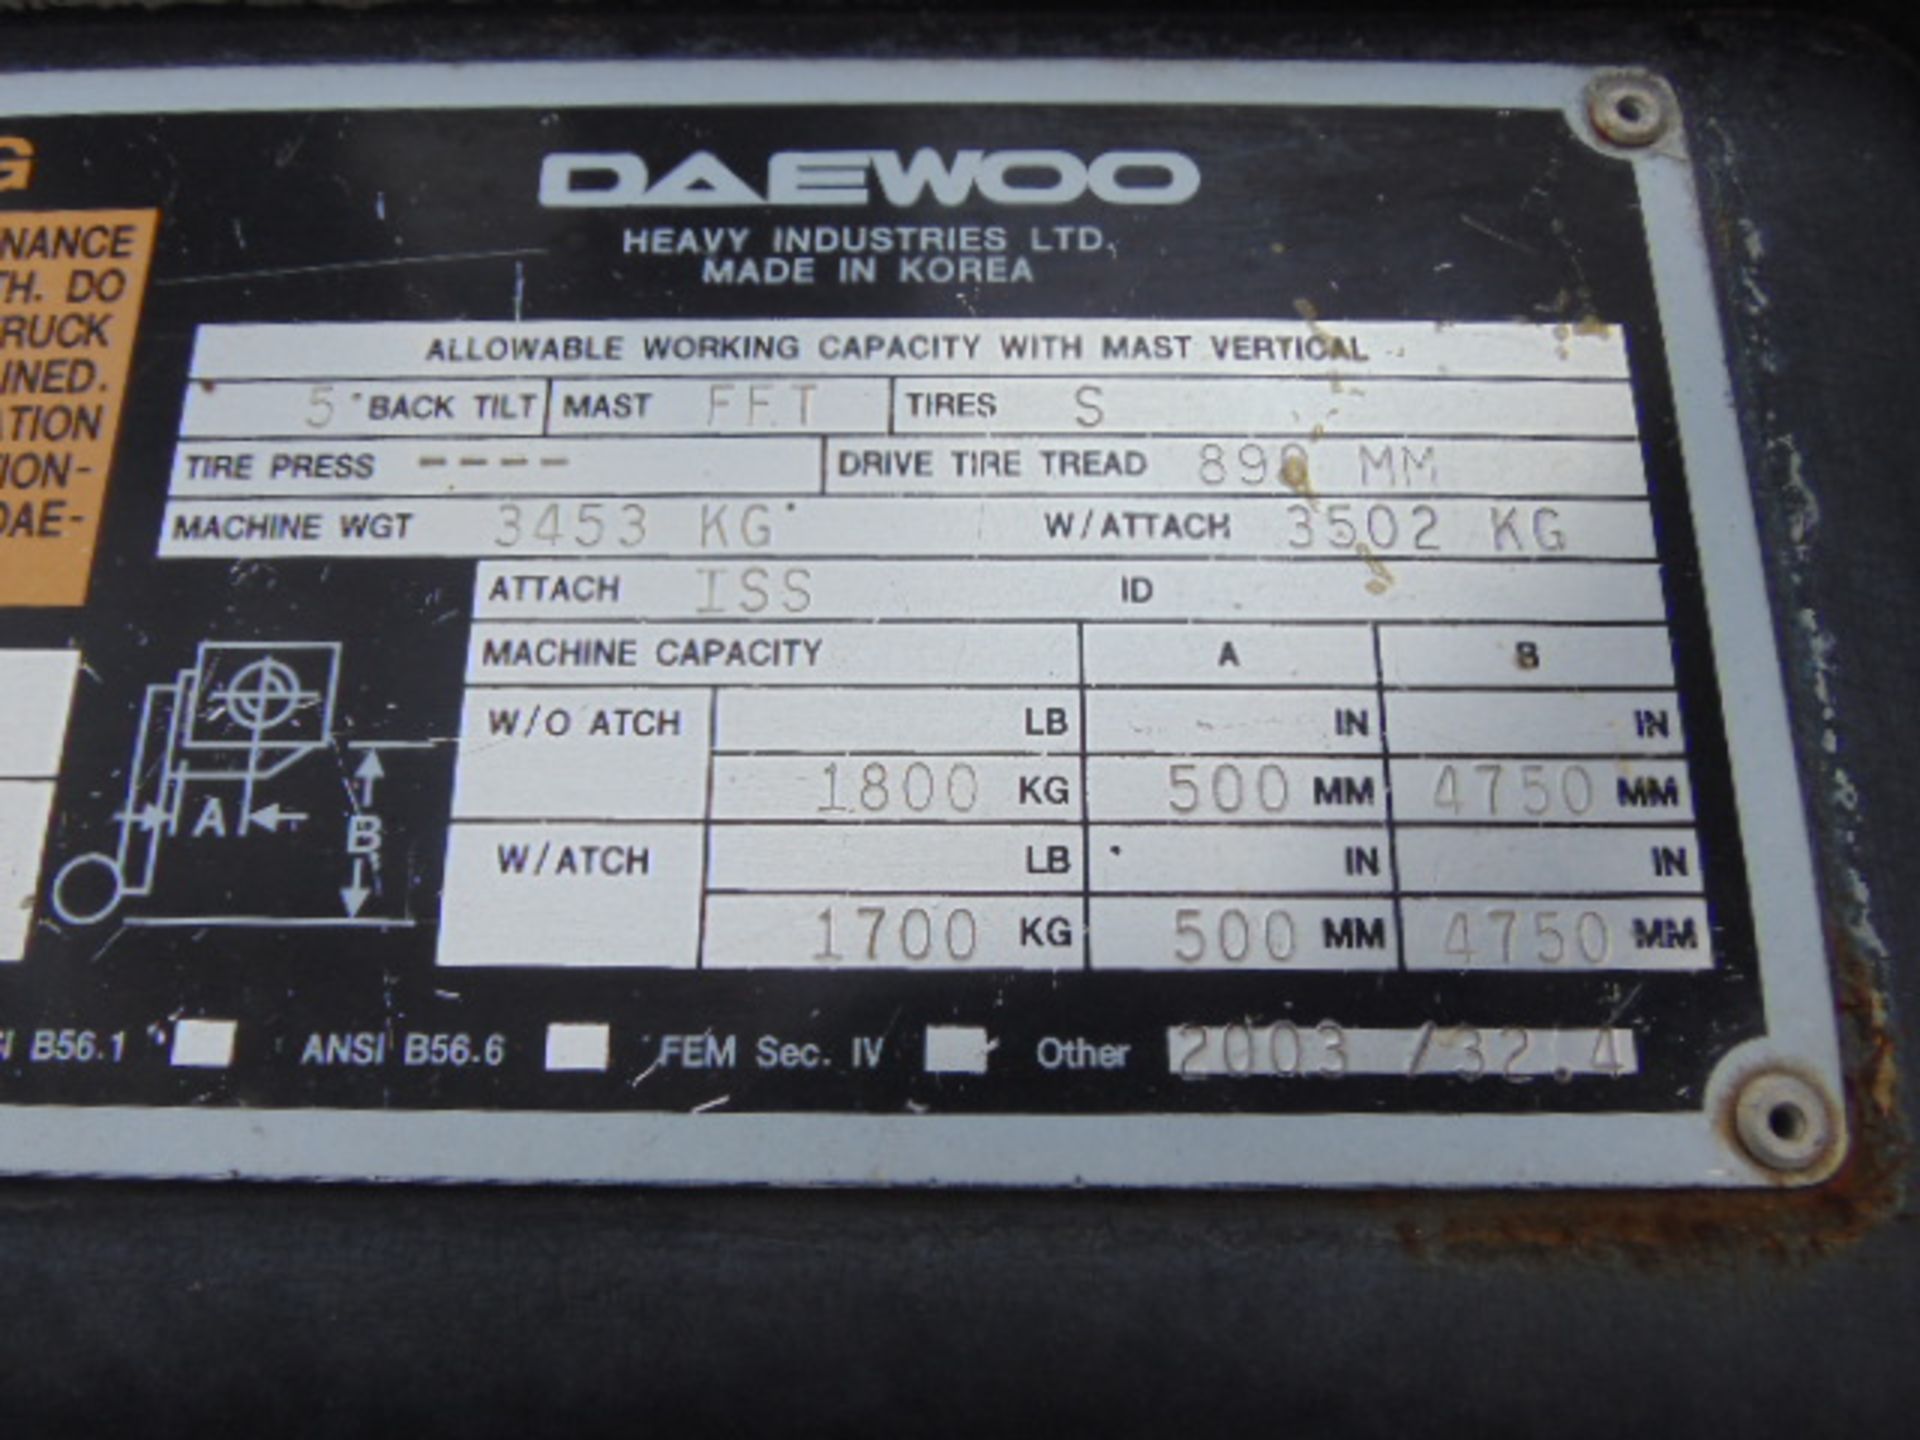 Daewoo D20SC-2 Counter Balance Diesel Forklift - Image 15 of 18